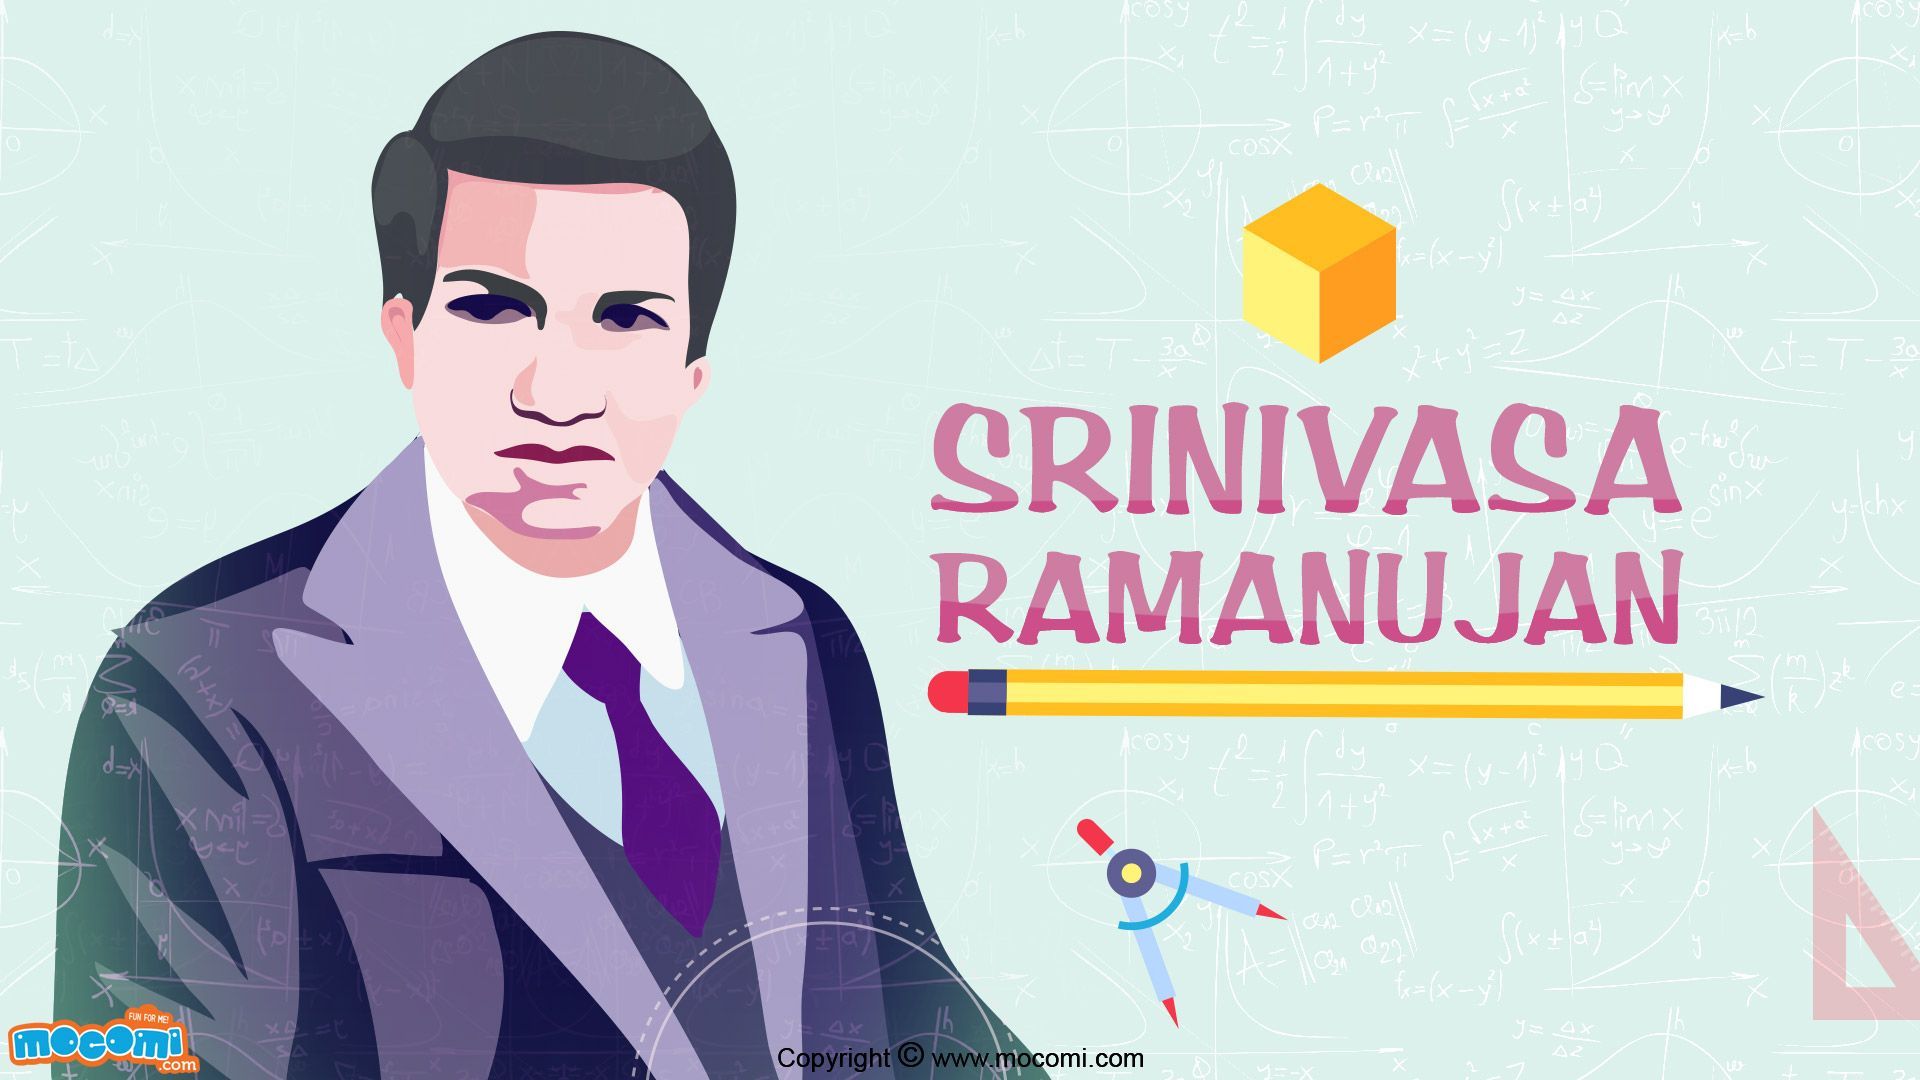 Srinivasa Ramanujan Biography for Kids